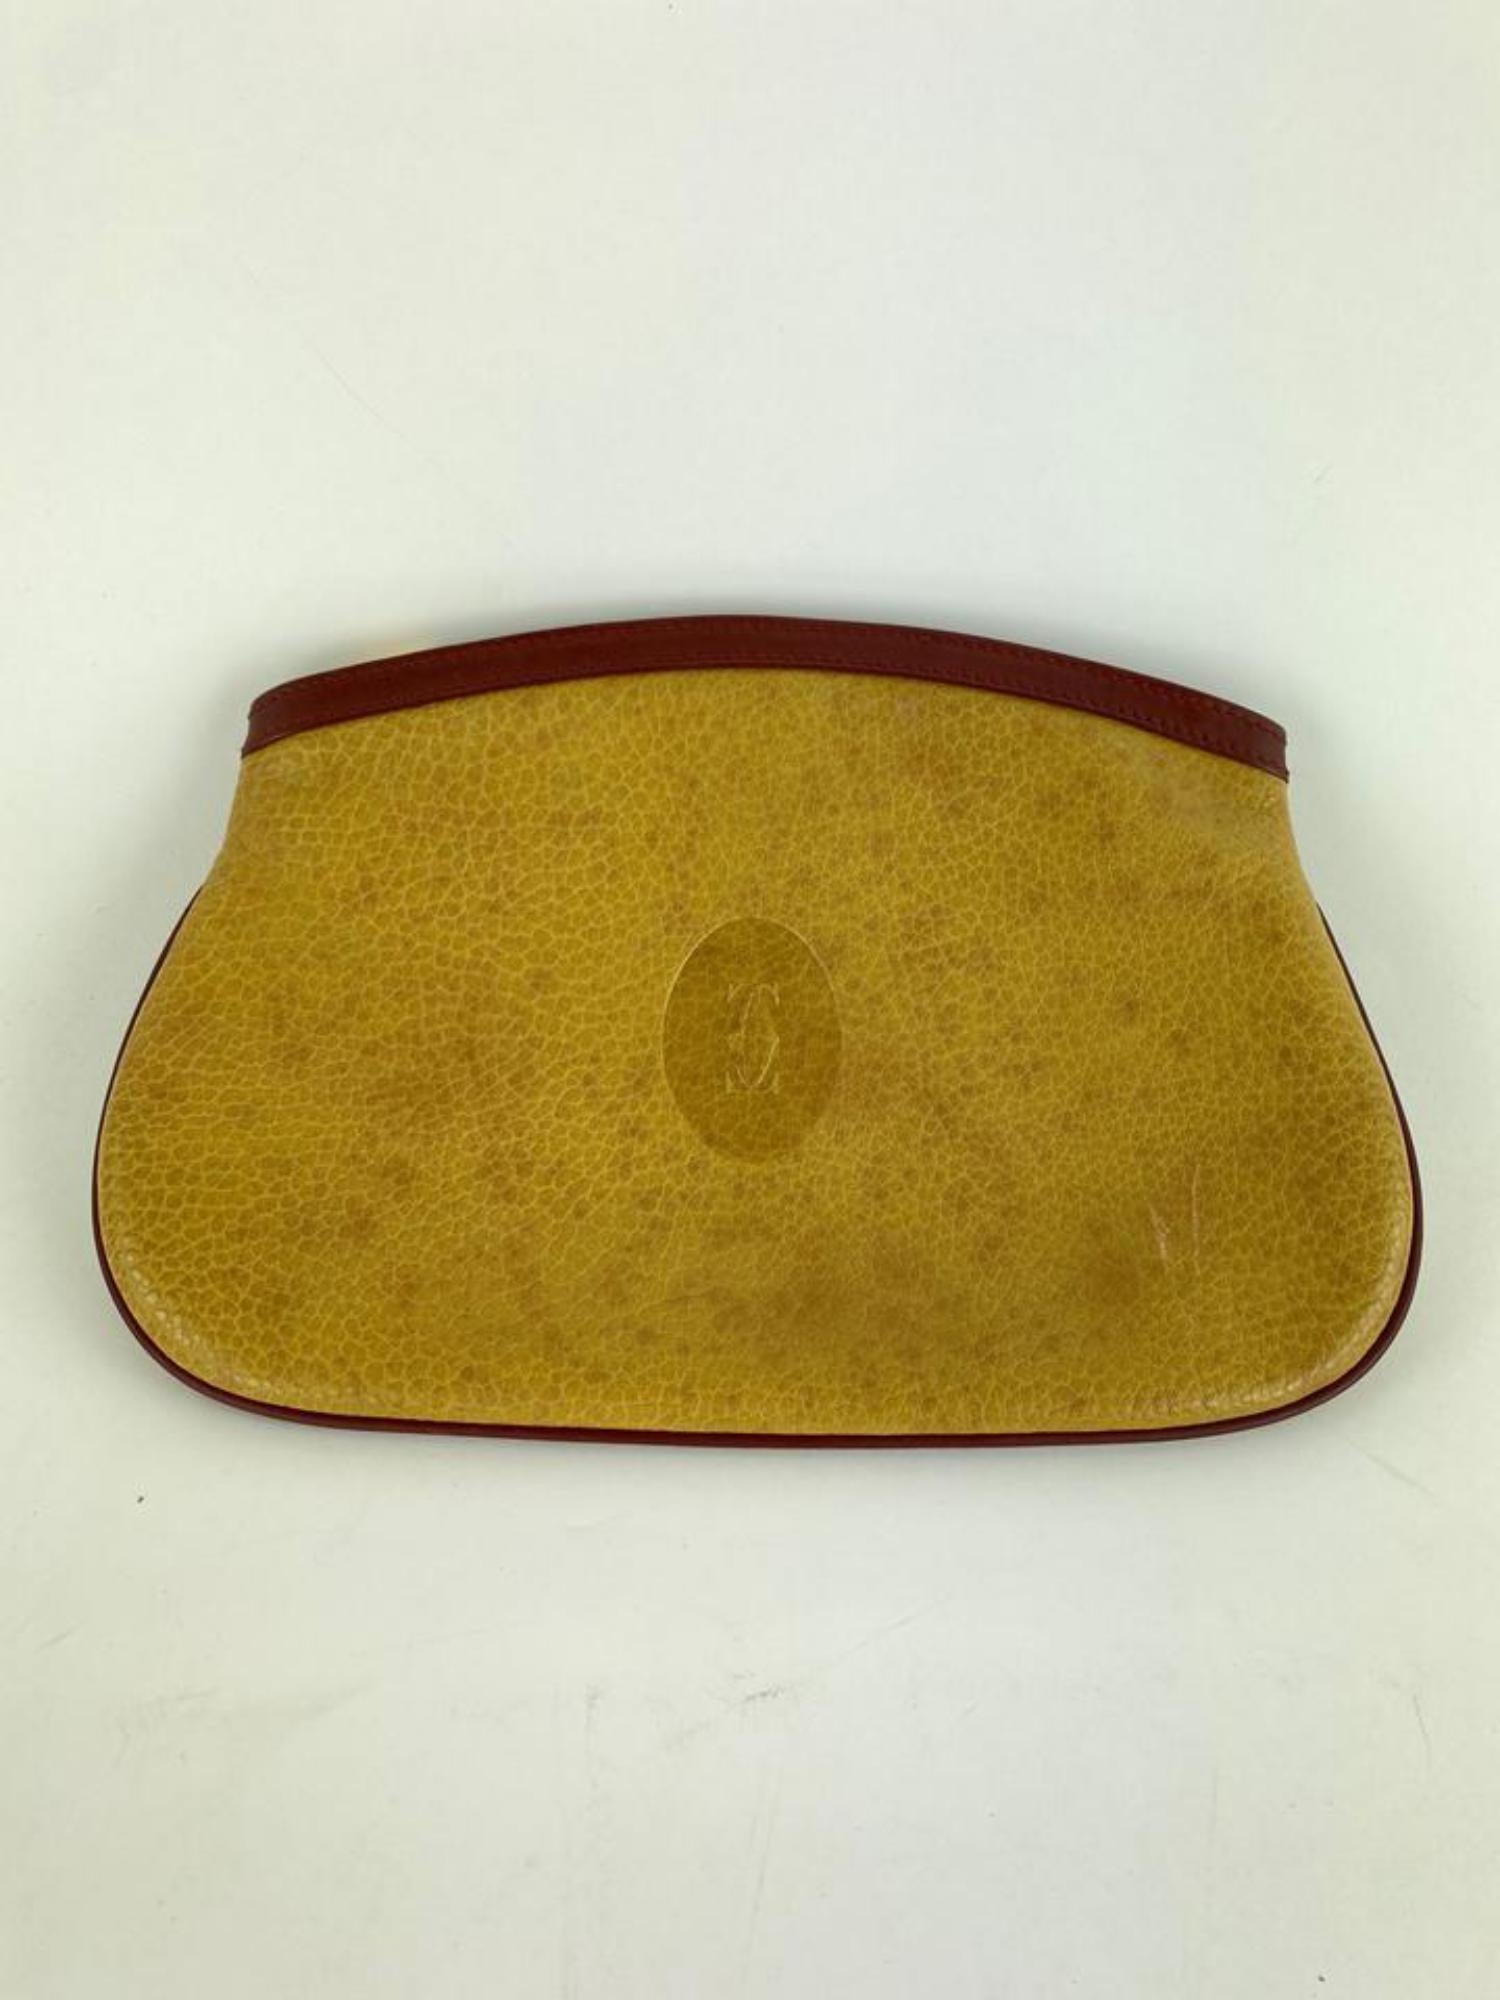 Women's Cartier Beige Leather Clutch Bag 33ct712s